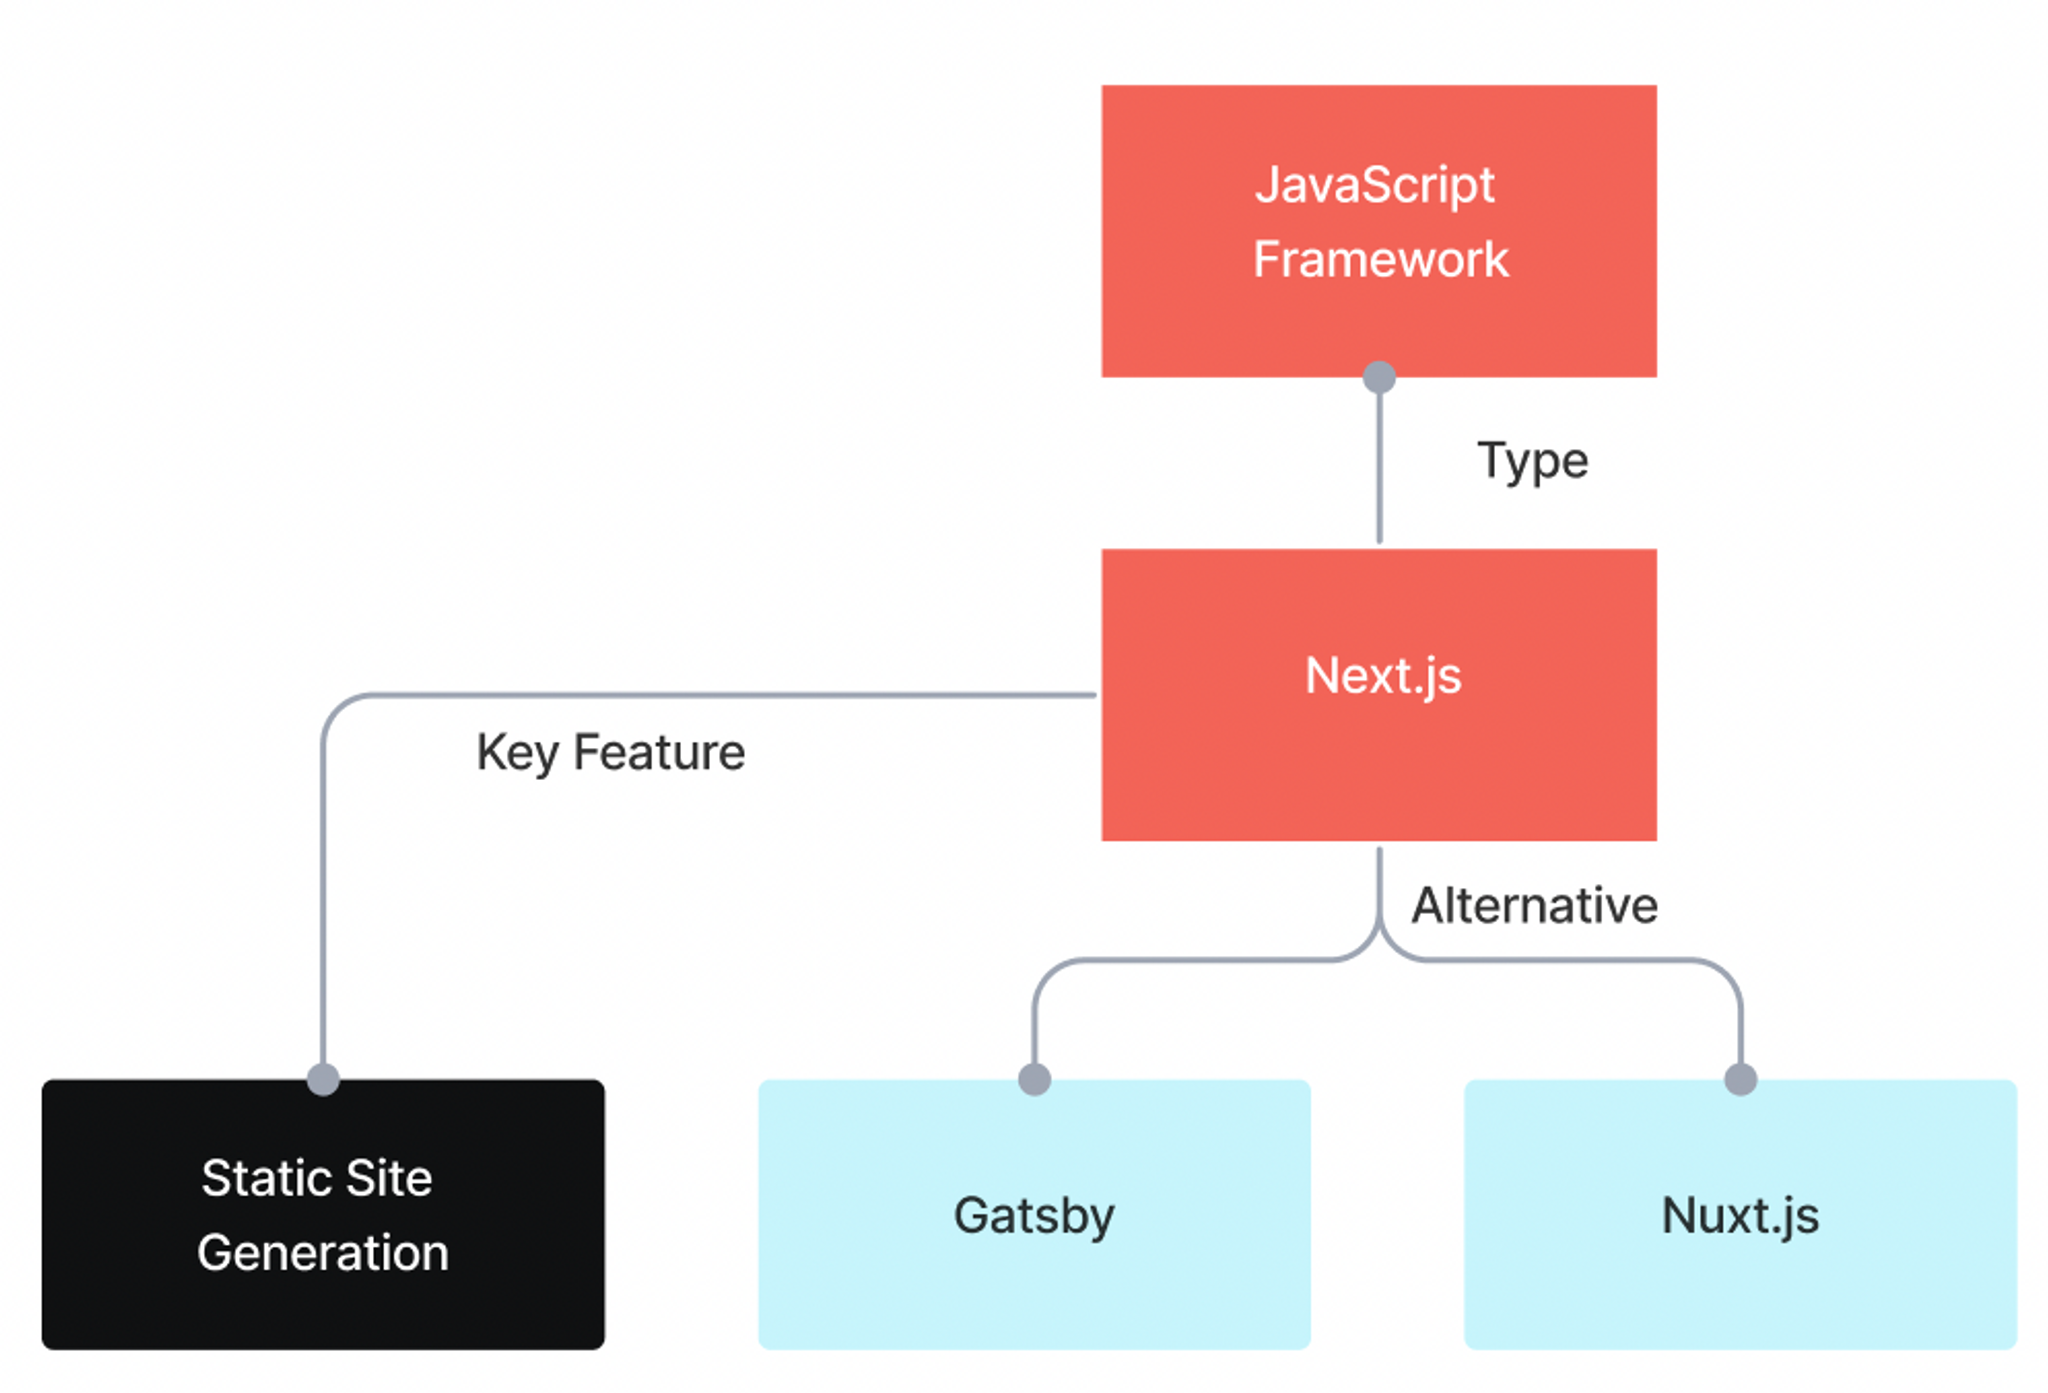 A diagram showing a JavaScript framework Next.js and alternatives